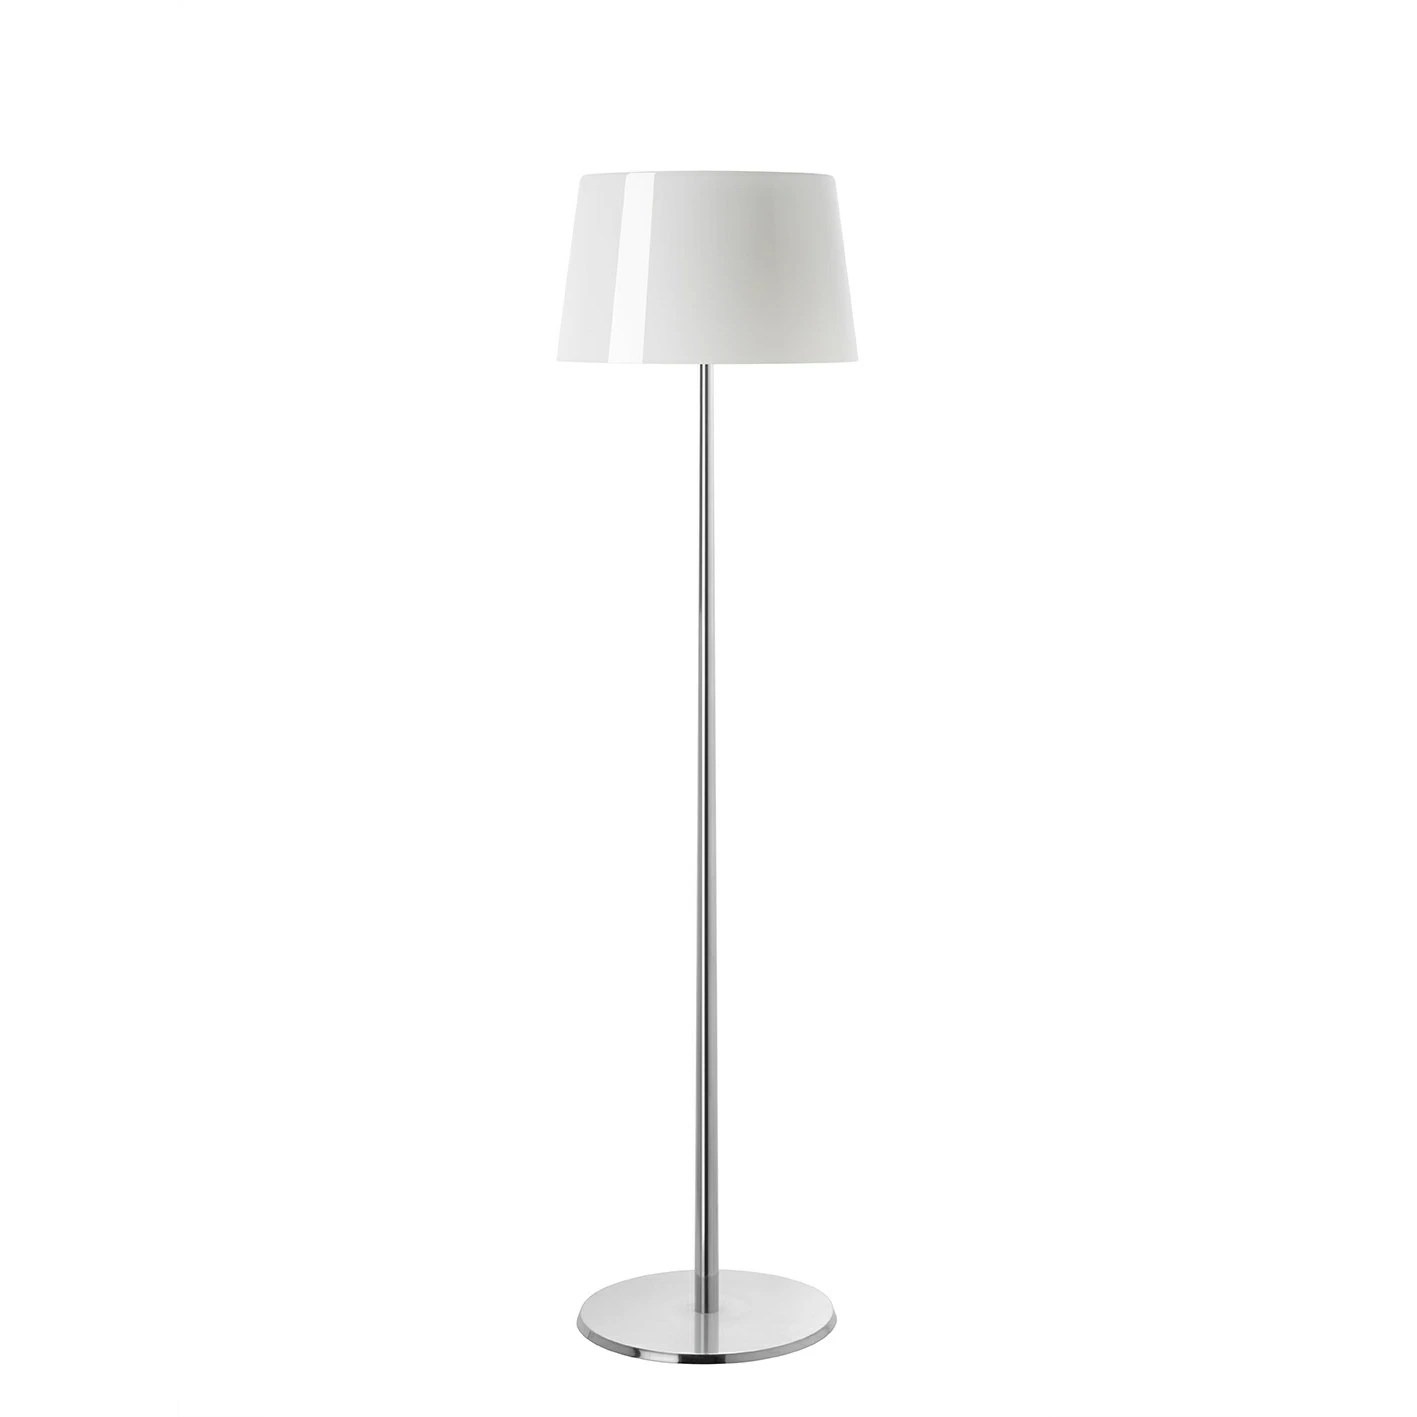 udsættelse Interessant træt af Lumiere XXL Floor Lamp Aluminium with White - Foscarini - Buy online